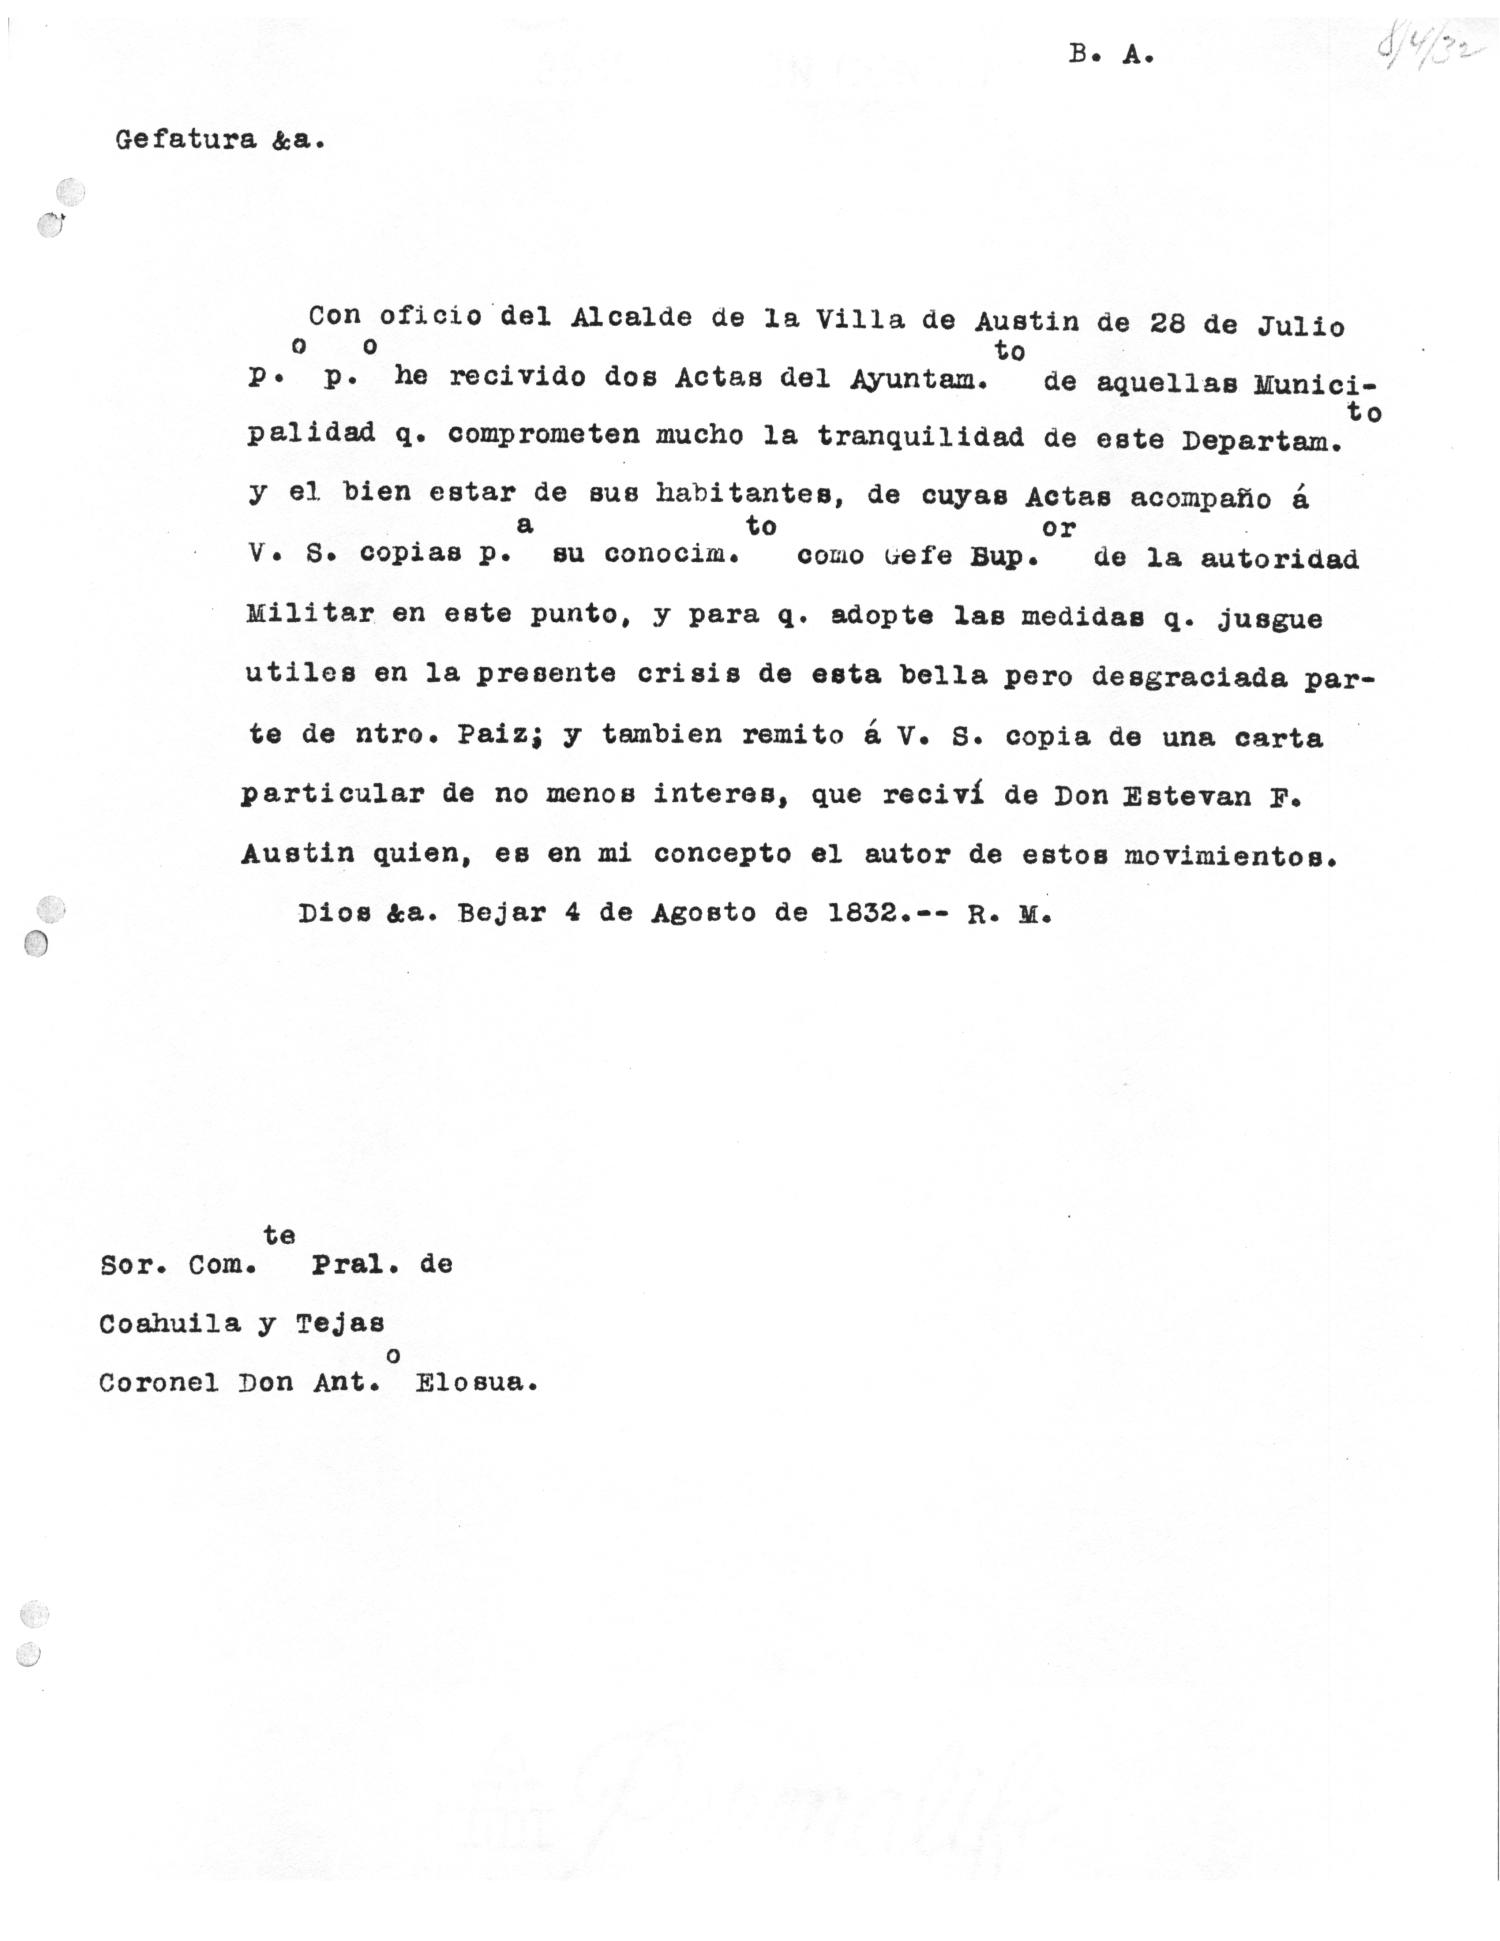 Transcript Of Letter From R M Ramon Musquiz To Antonio Elosua August 4 12 The Portal To Texas History